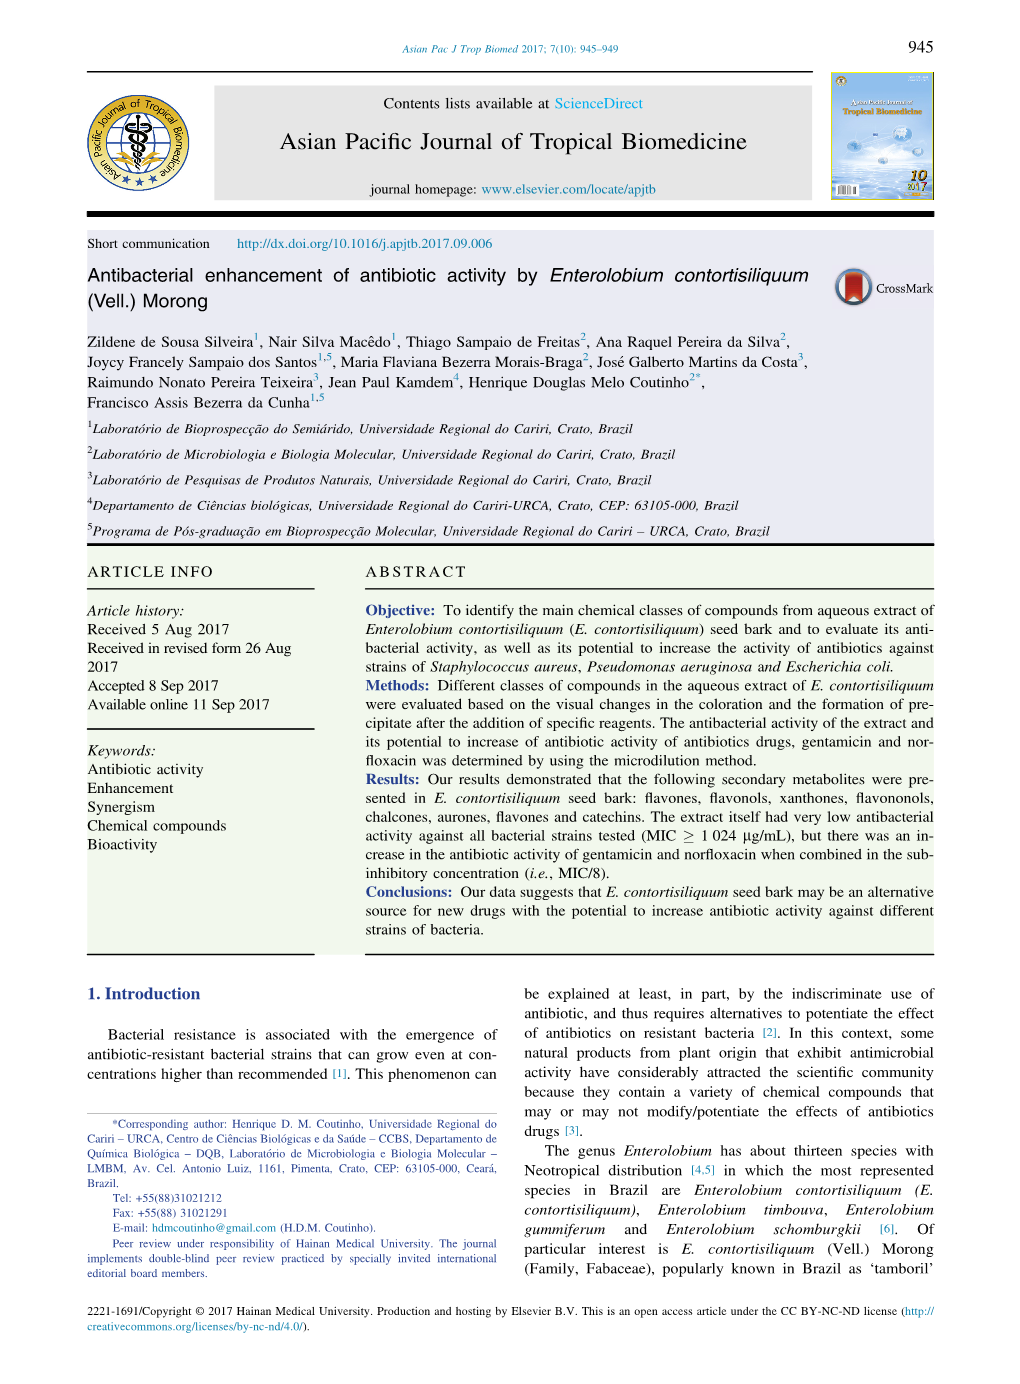 Antibacterial Enhancement of Antibiotic Activity by Enterolobium Contortisiliquum (Vell.) Morong